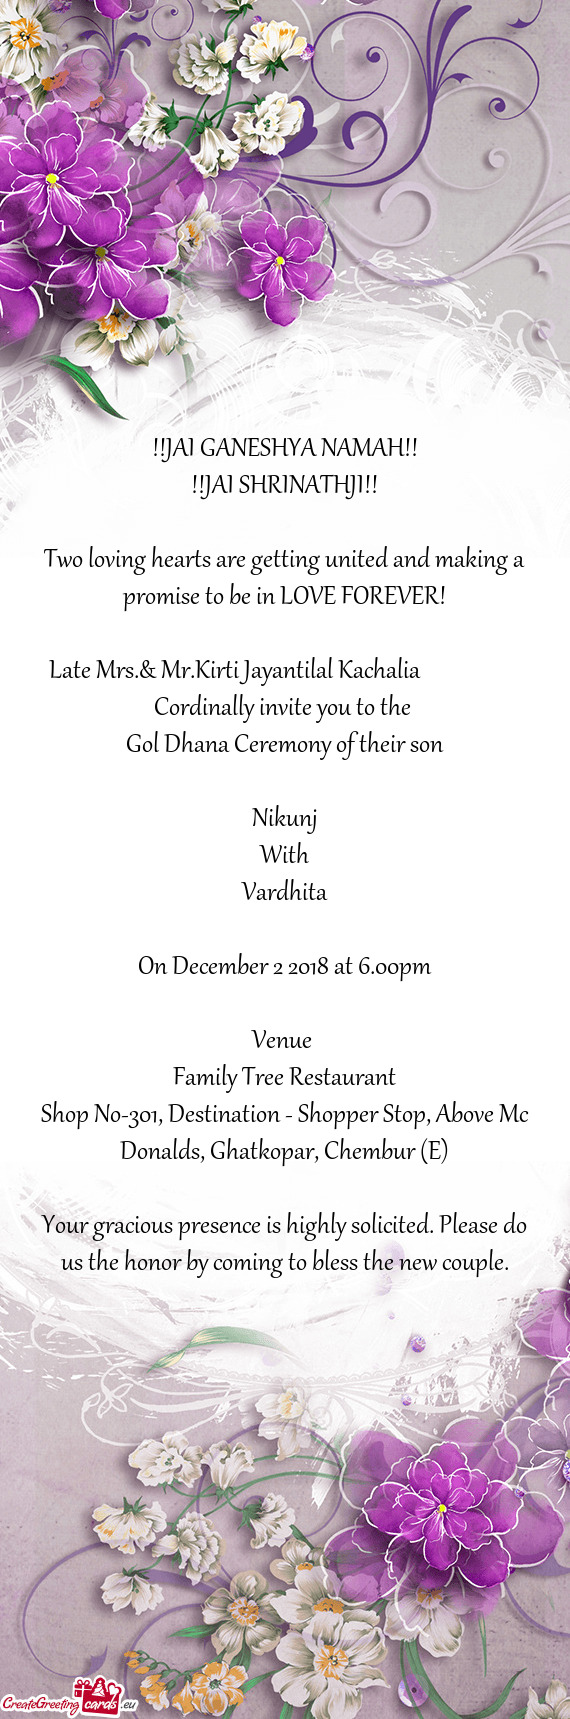 Late Mrs.& Mr.Kirti Jayantilal Kachalia      Cordinally invite you to the